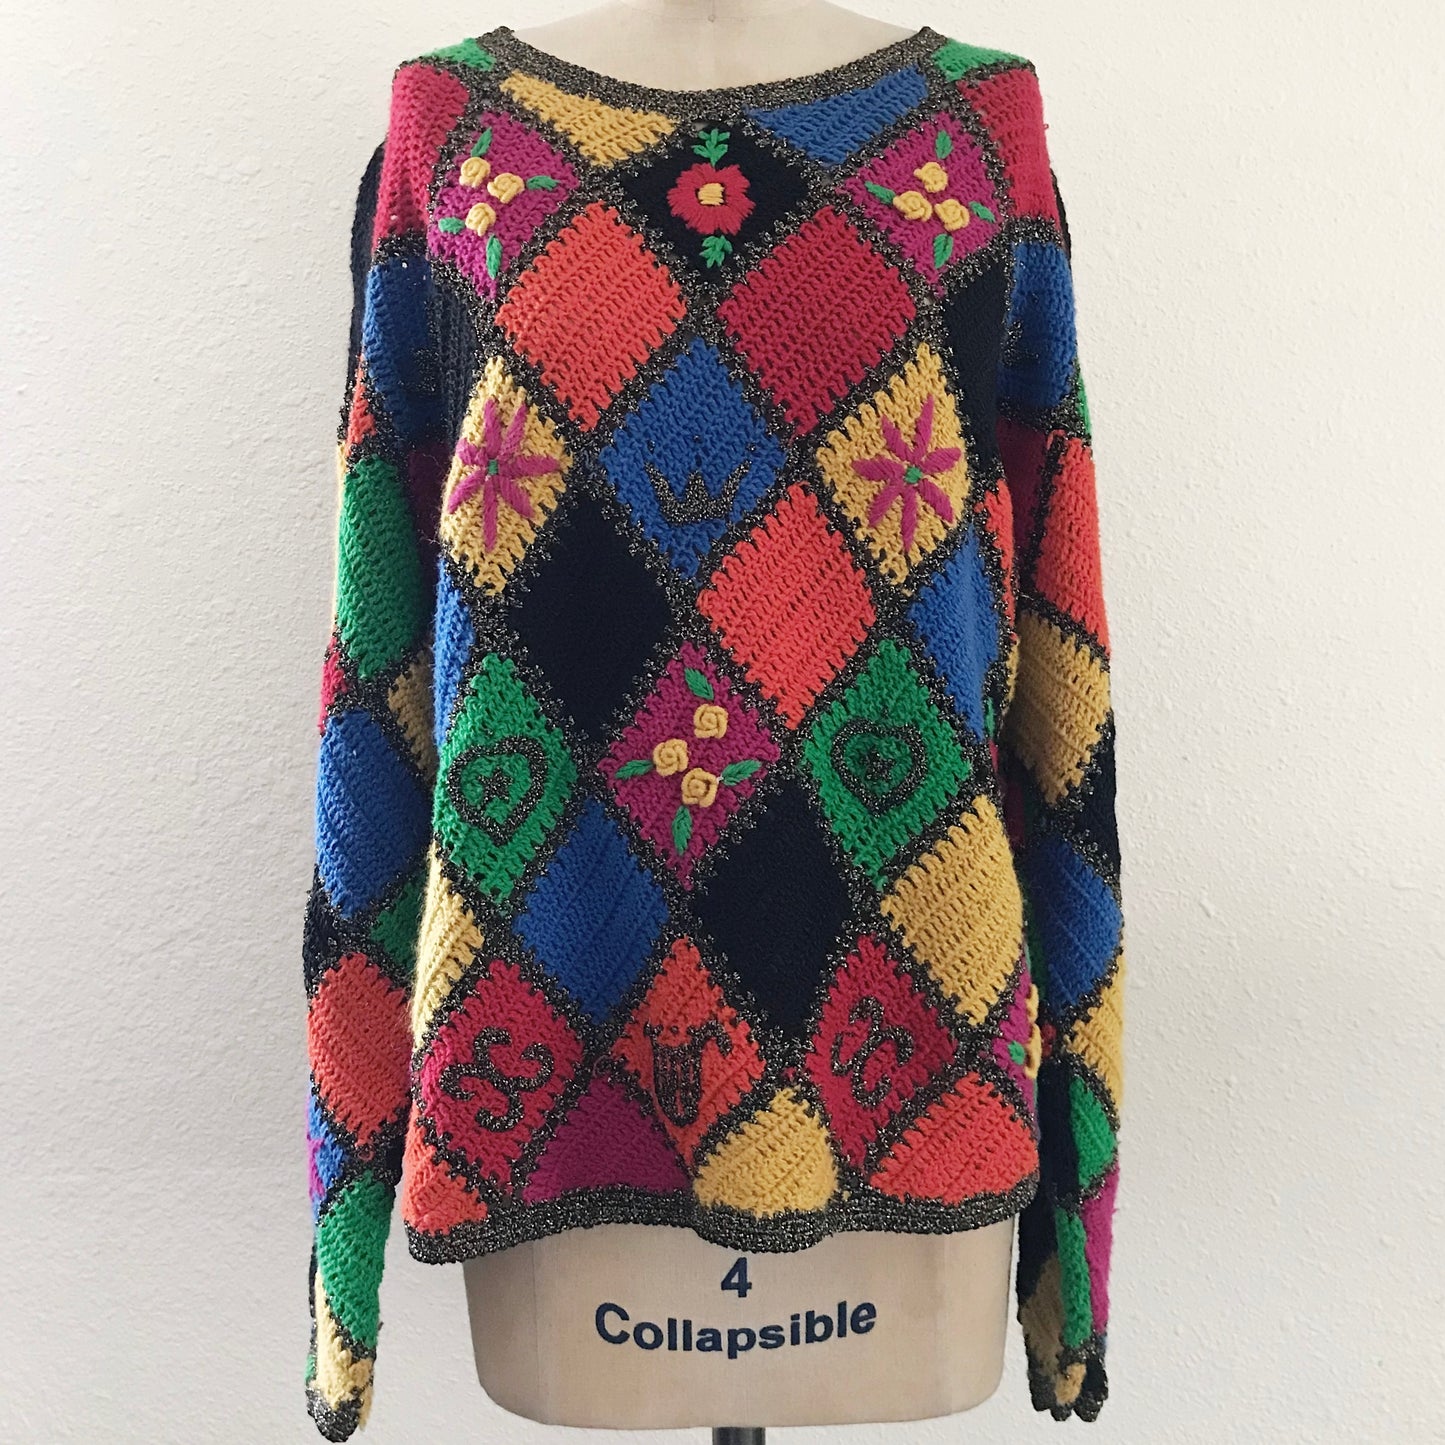 Jennifer Reed Vintage Hand Knit Colorful Cotton Crochet Sweater